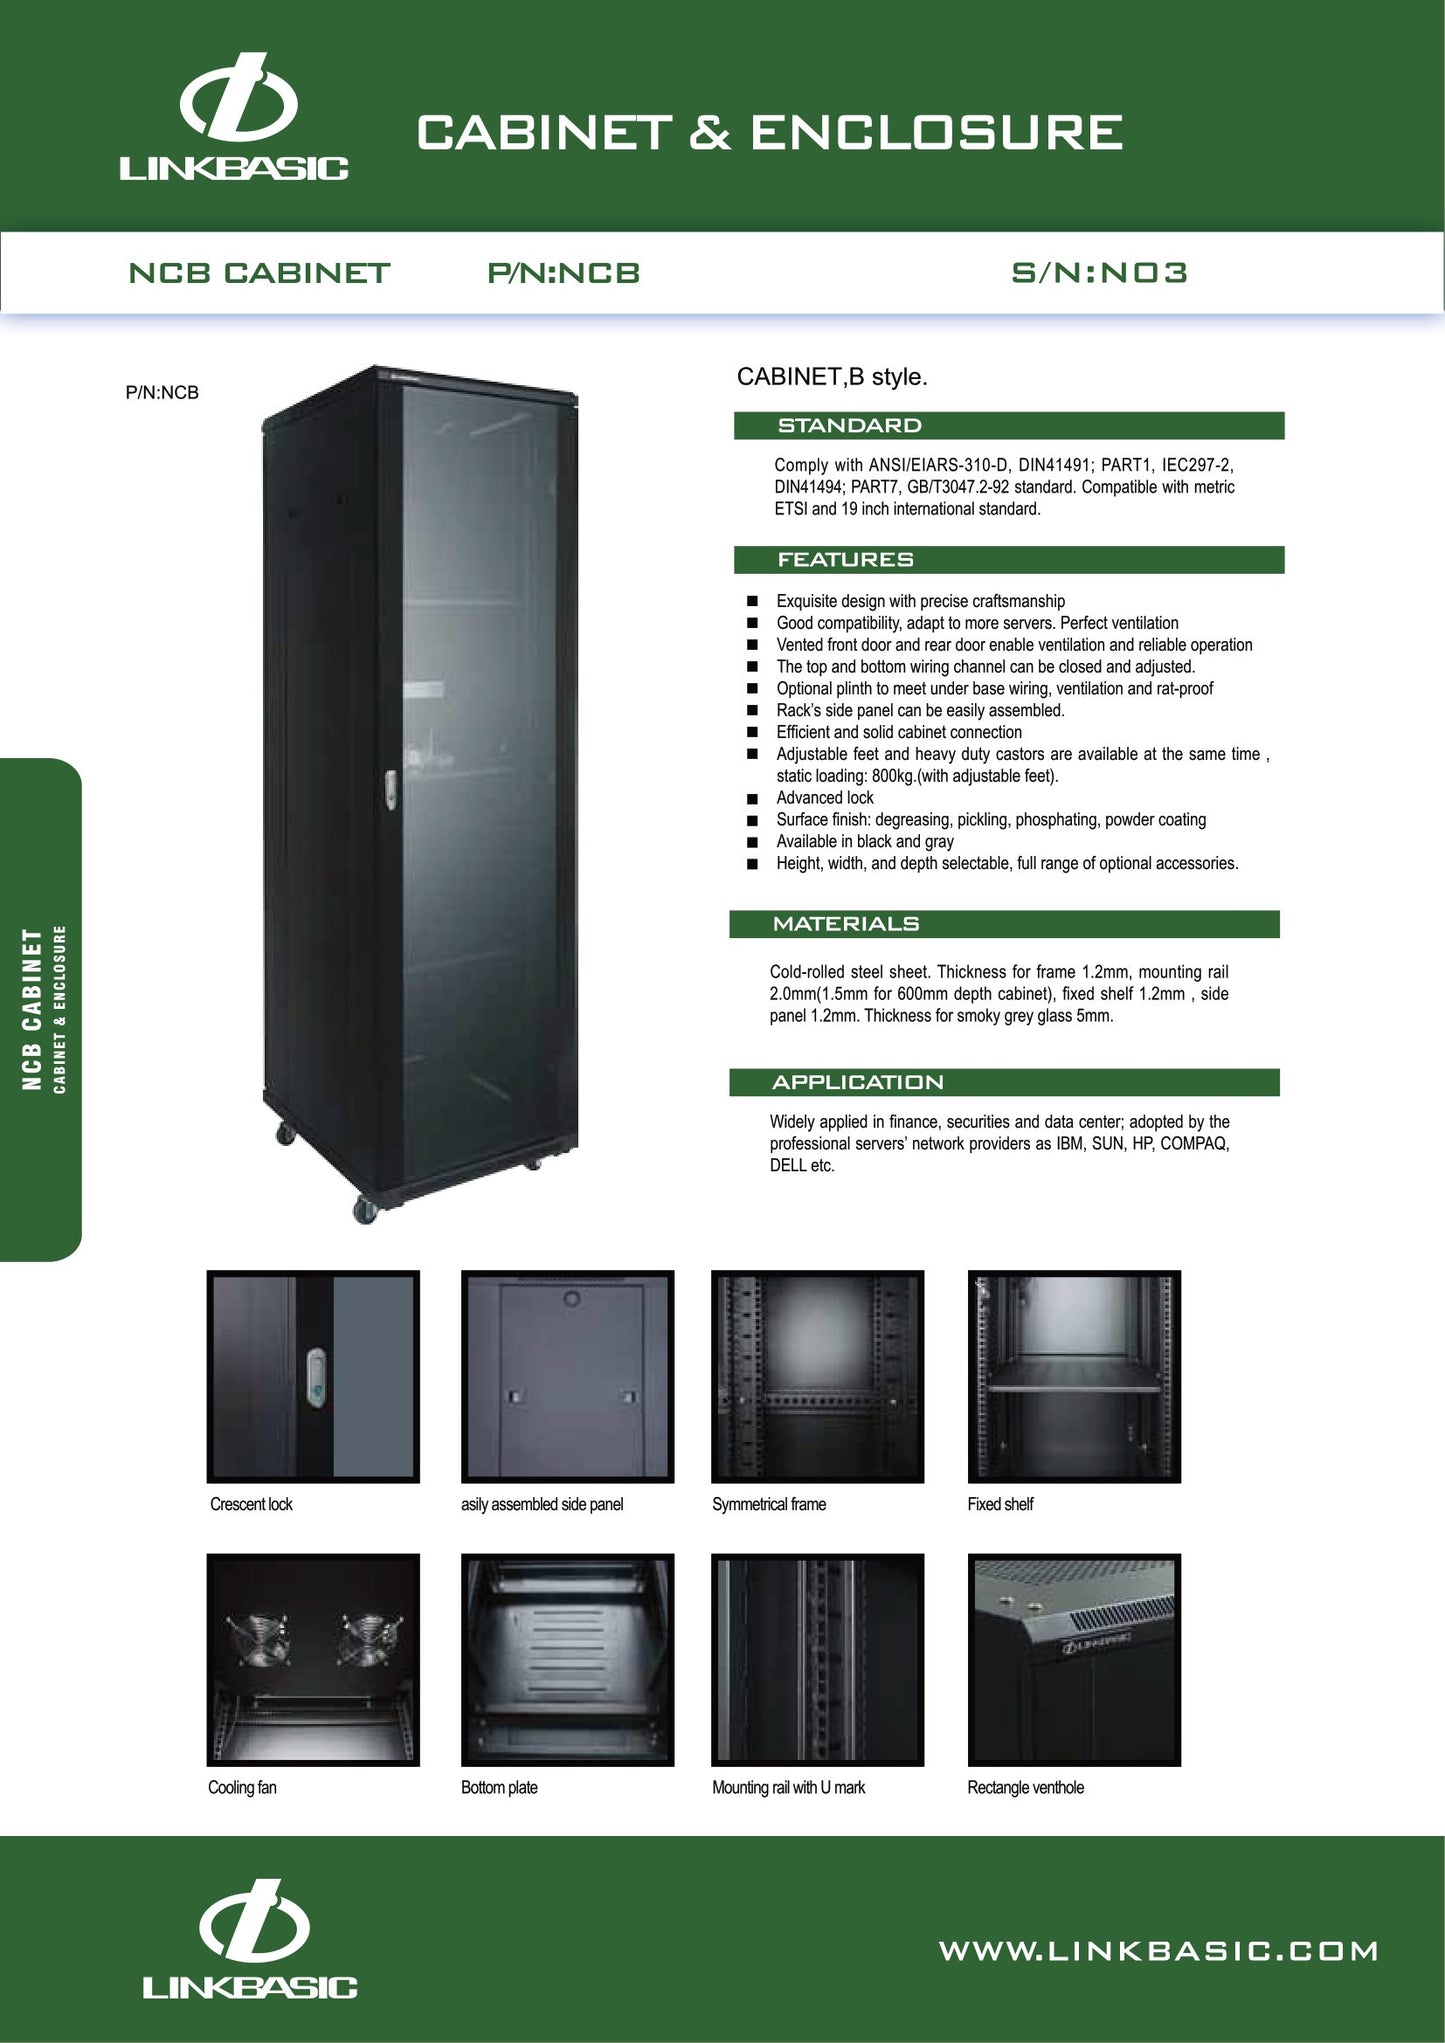 Linkbasic 27U 800 Deep Network Cabinet. 4 Fans & 2 Shelves